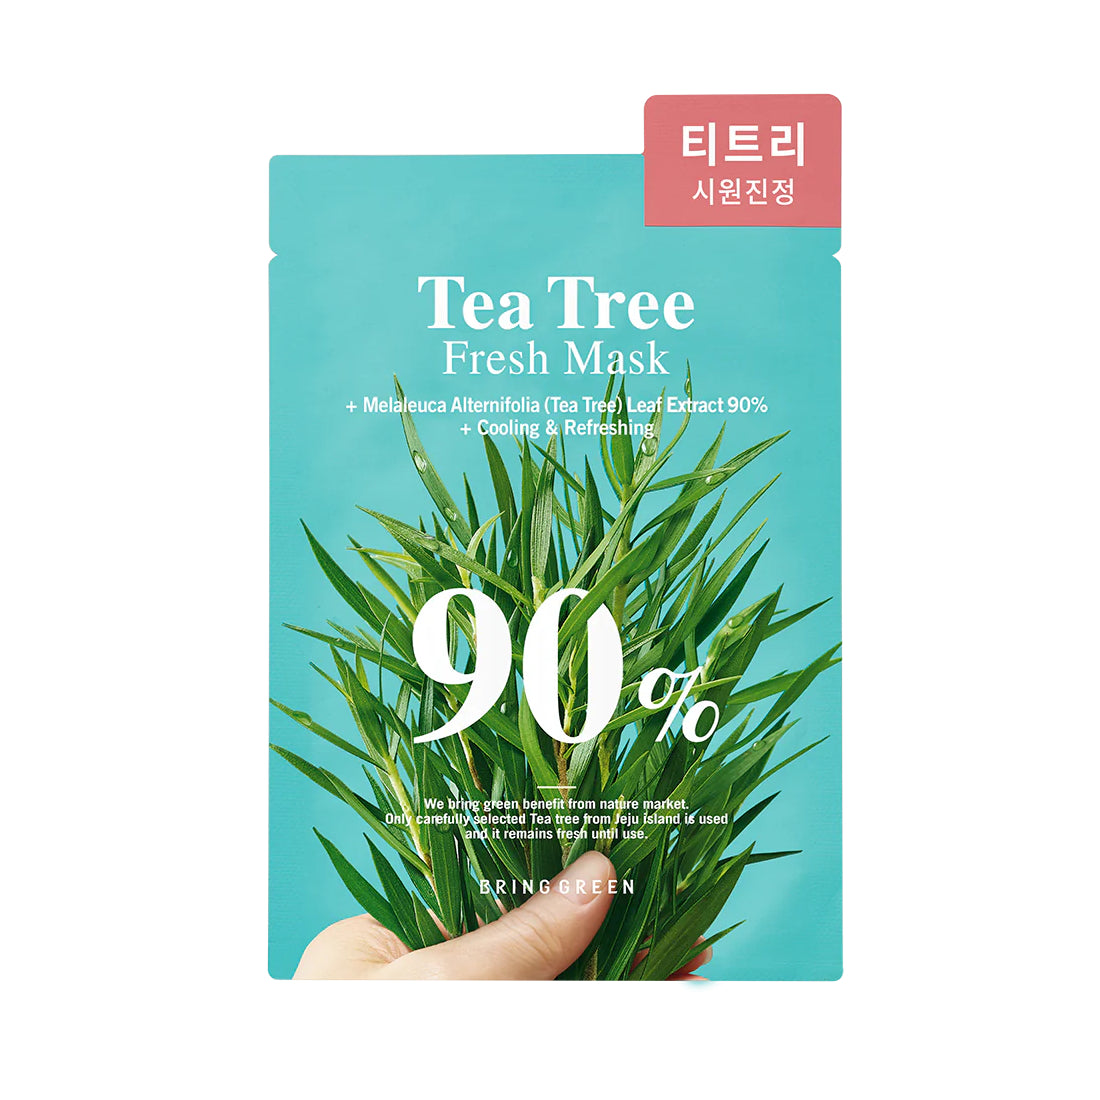 Bring Green Tea Tree 90% Fresh Mask Beauty Bring Green   